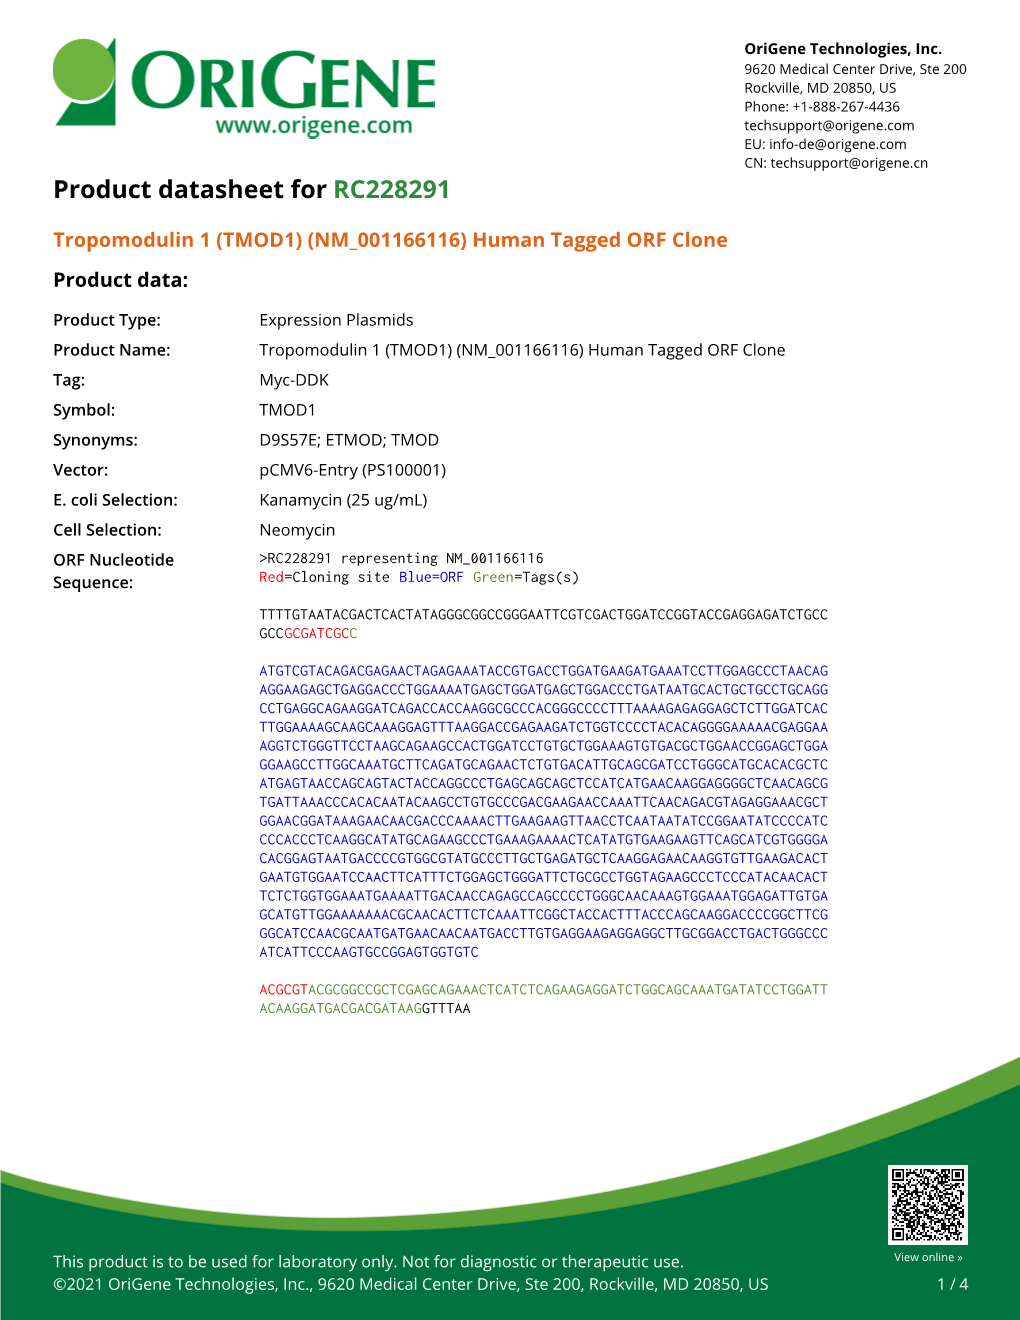 Tropomodulin 1 (TMOD1) (NM 001166116) Human Tagged ORF Clone – RC228291 | Origene